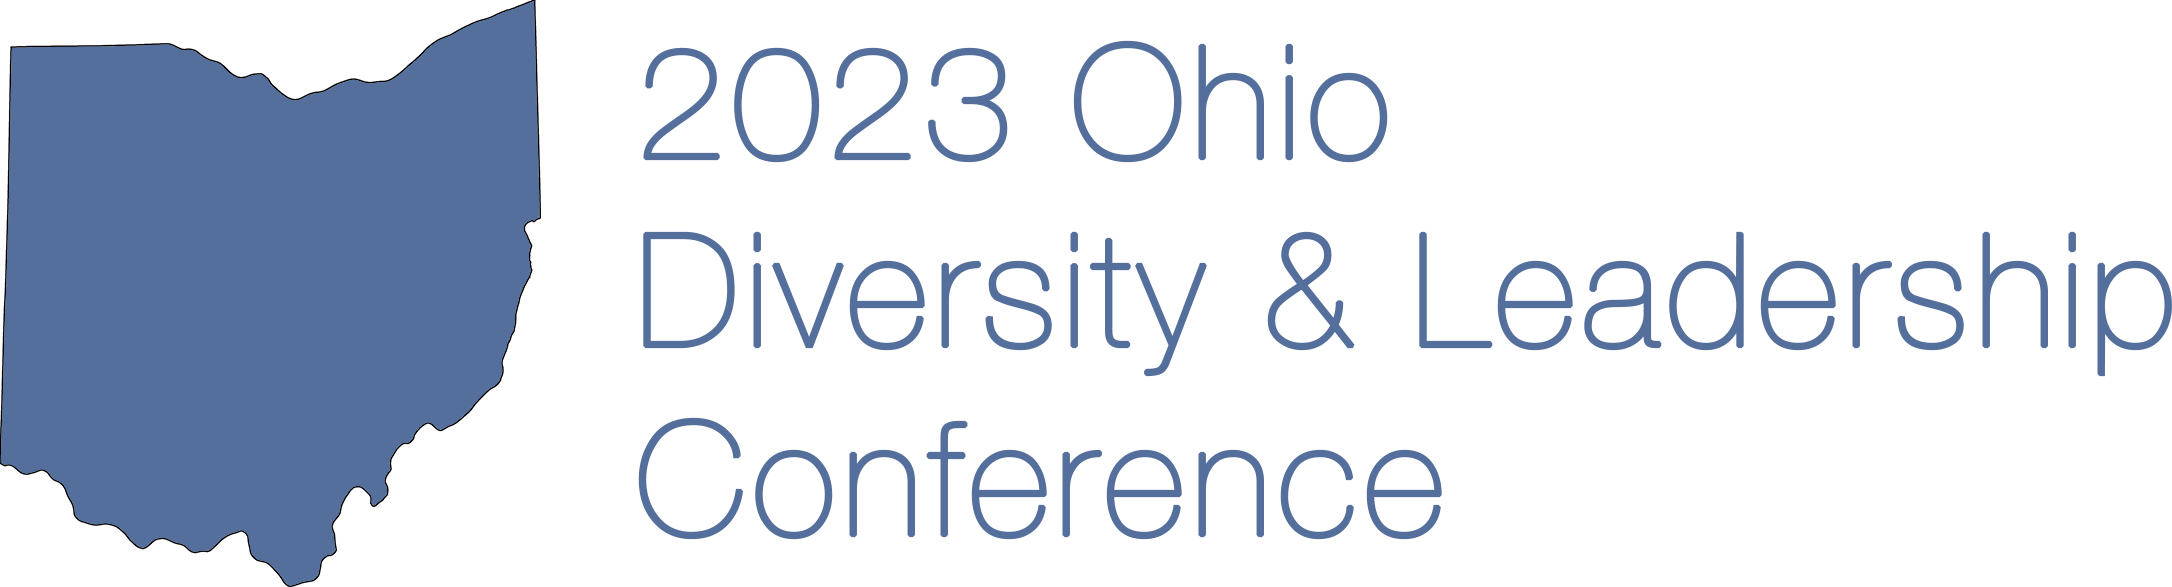 2023 Ohio Diversity & Leadership Conference